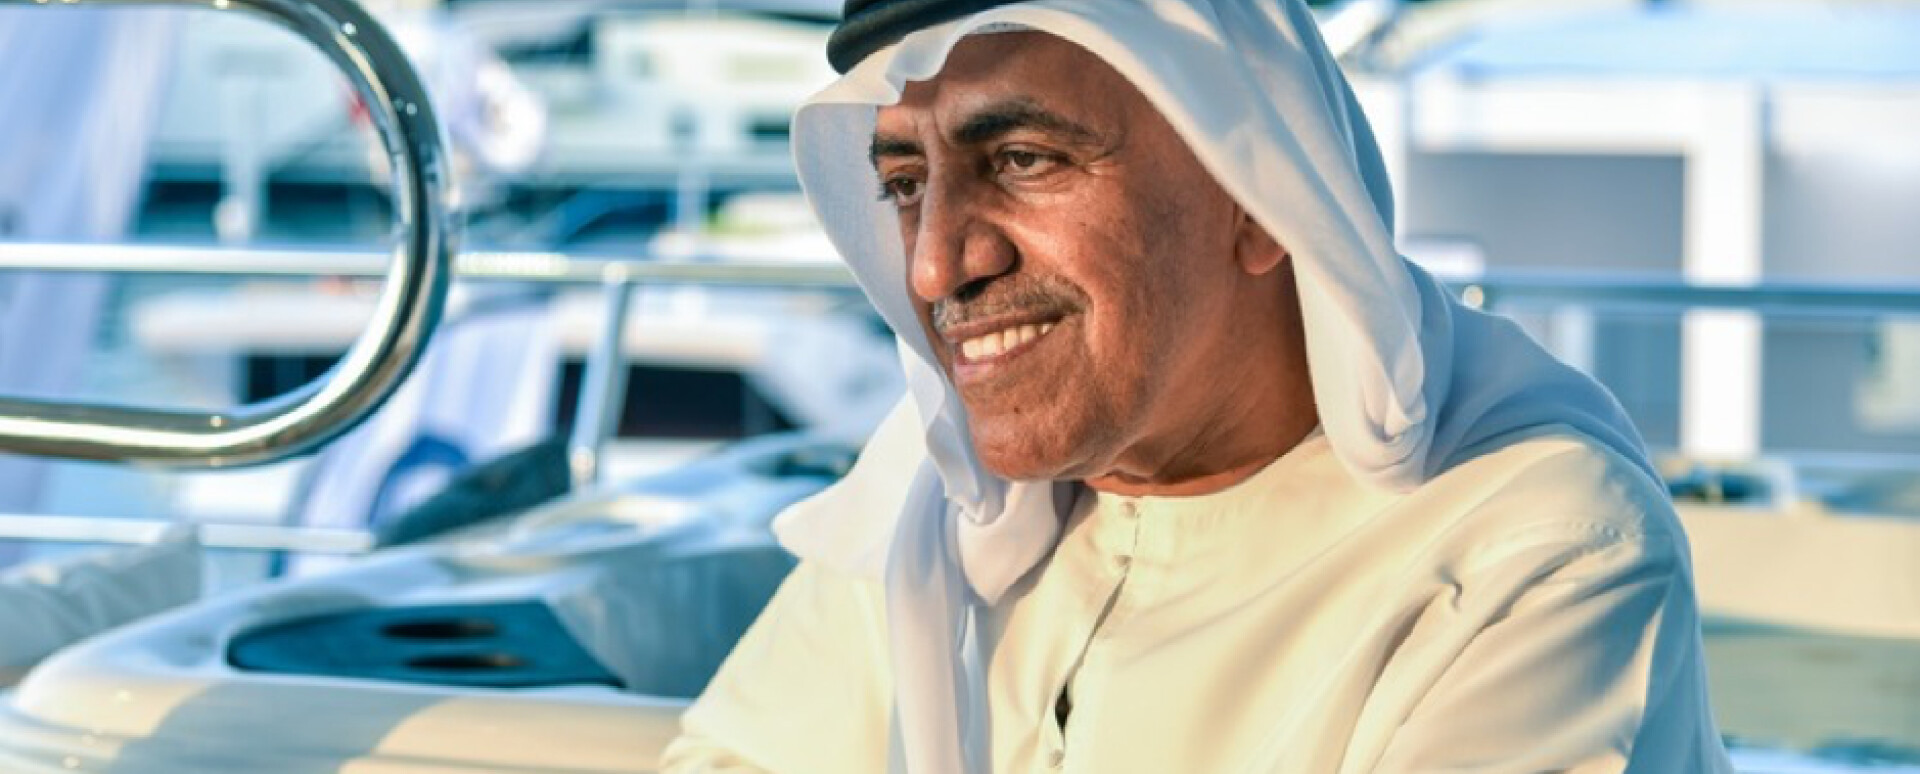                                                                                                     CEO of Gulf Craft steps down
                                                                                            